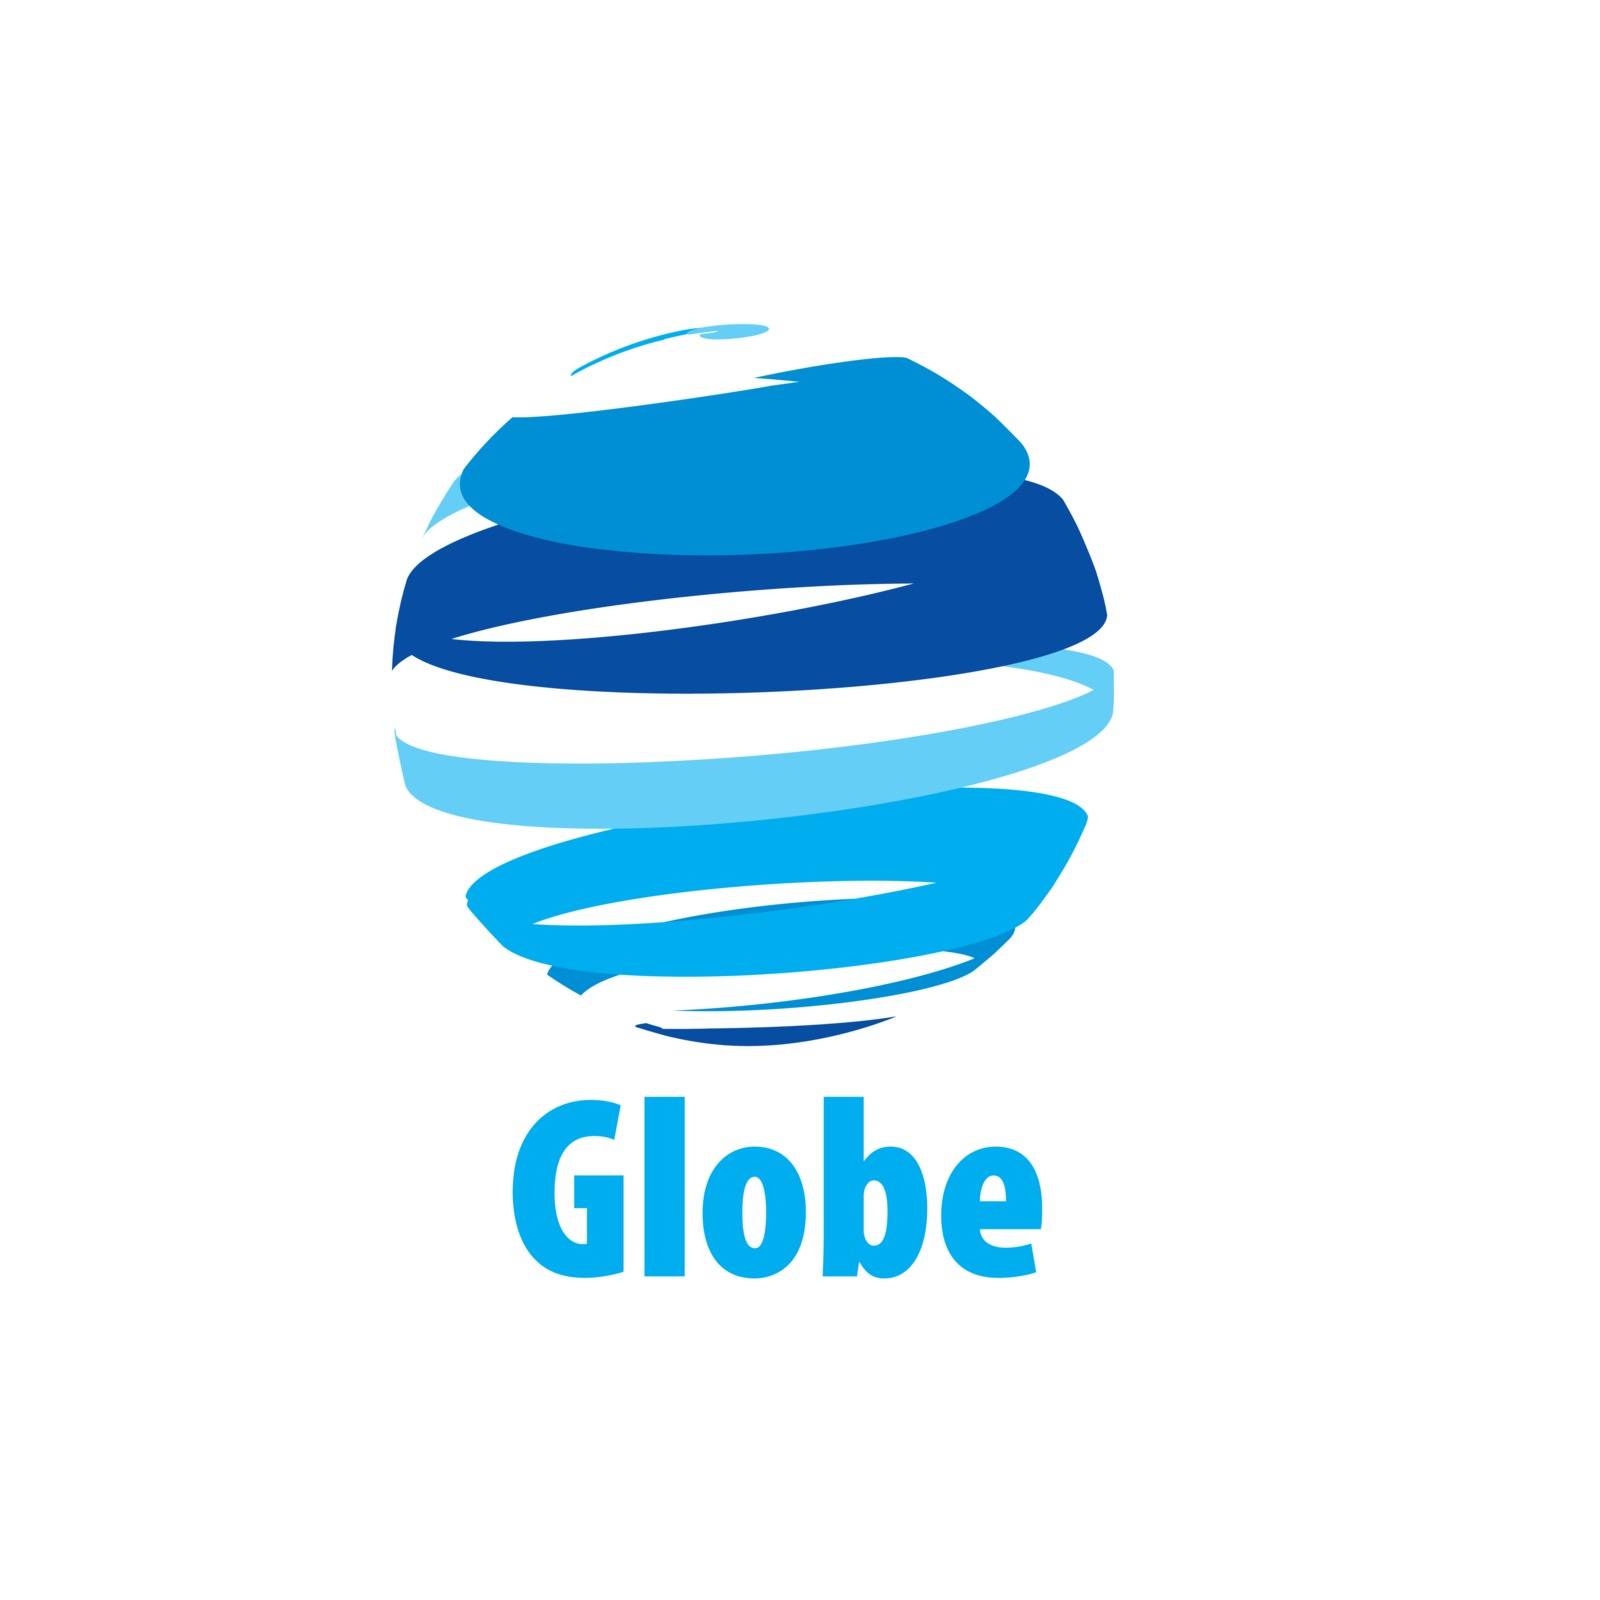 Abstract globe logo. Vector illustration. Design element